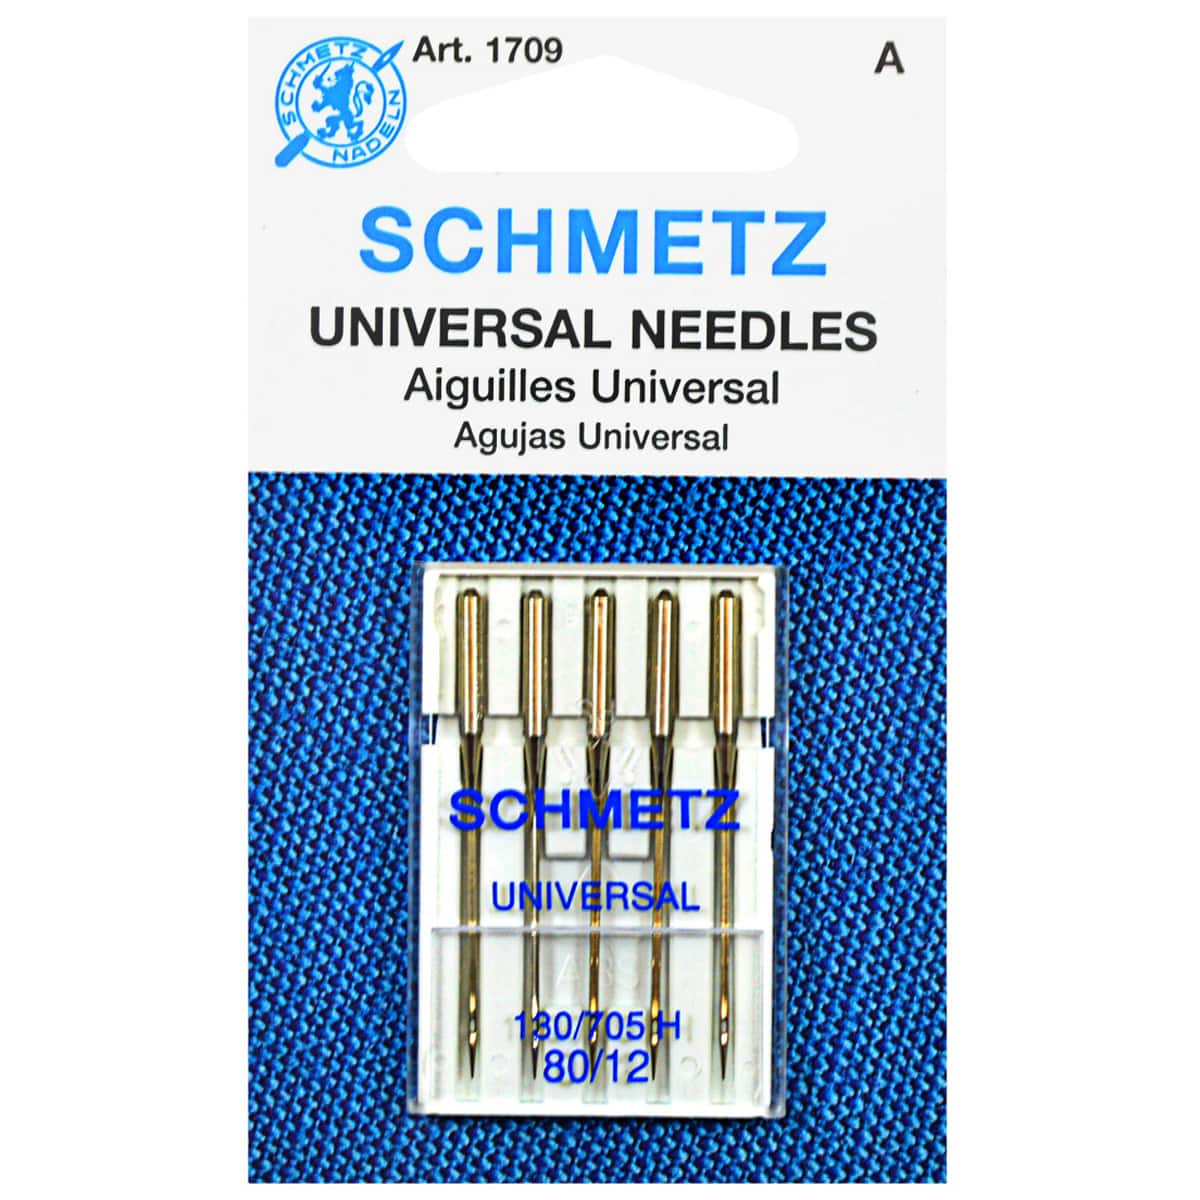 Schmetz 80/12 Universal Needles - Each